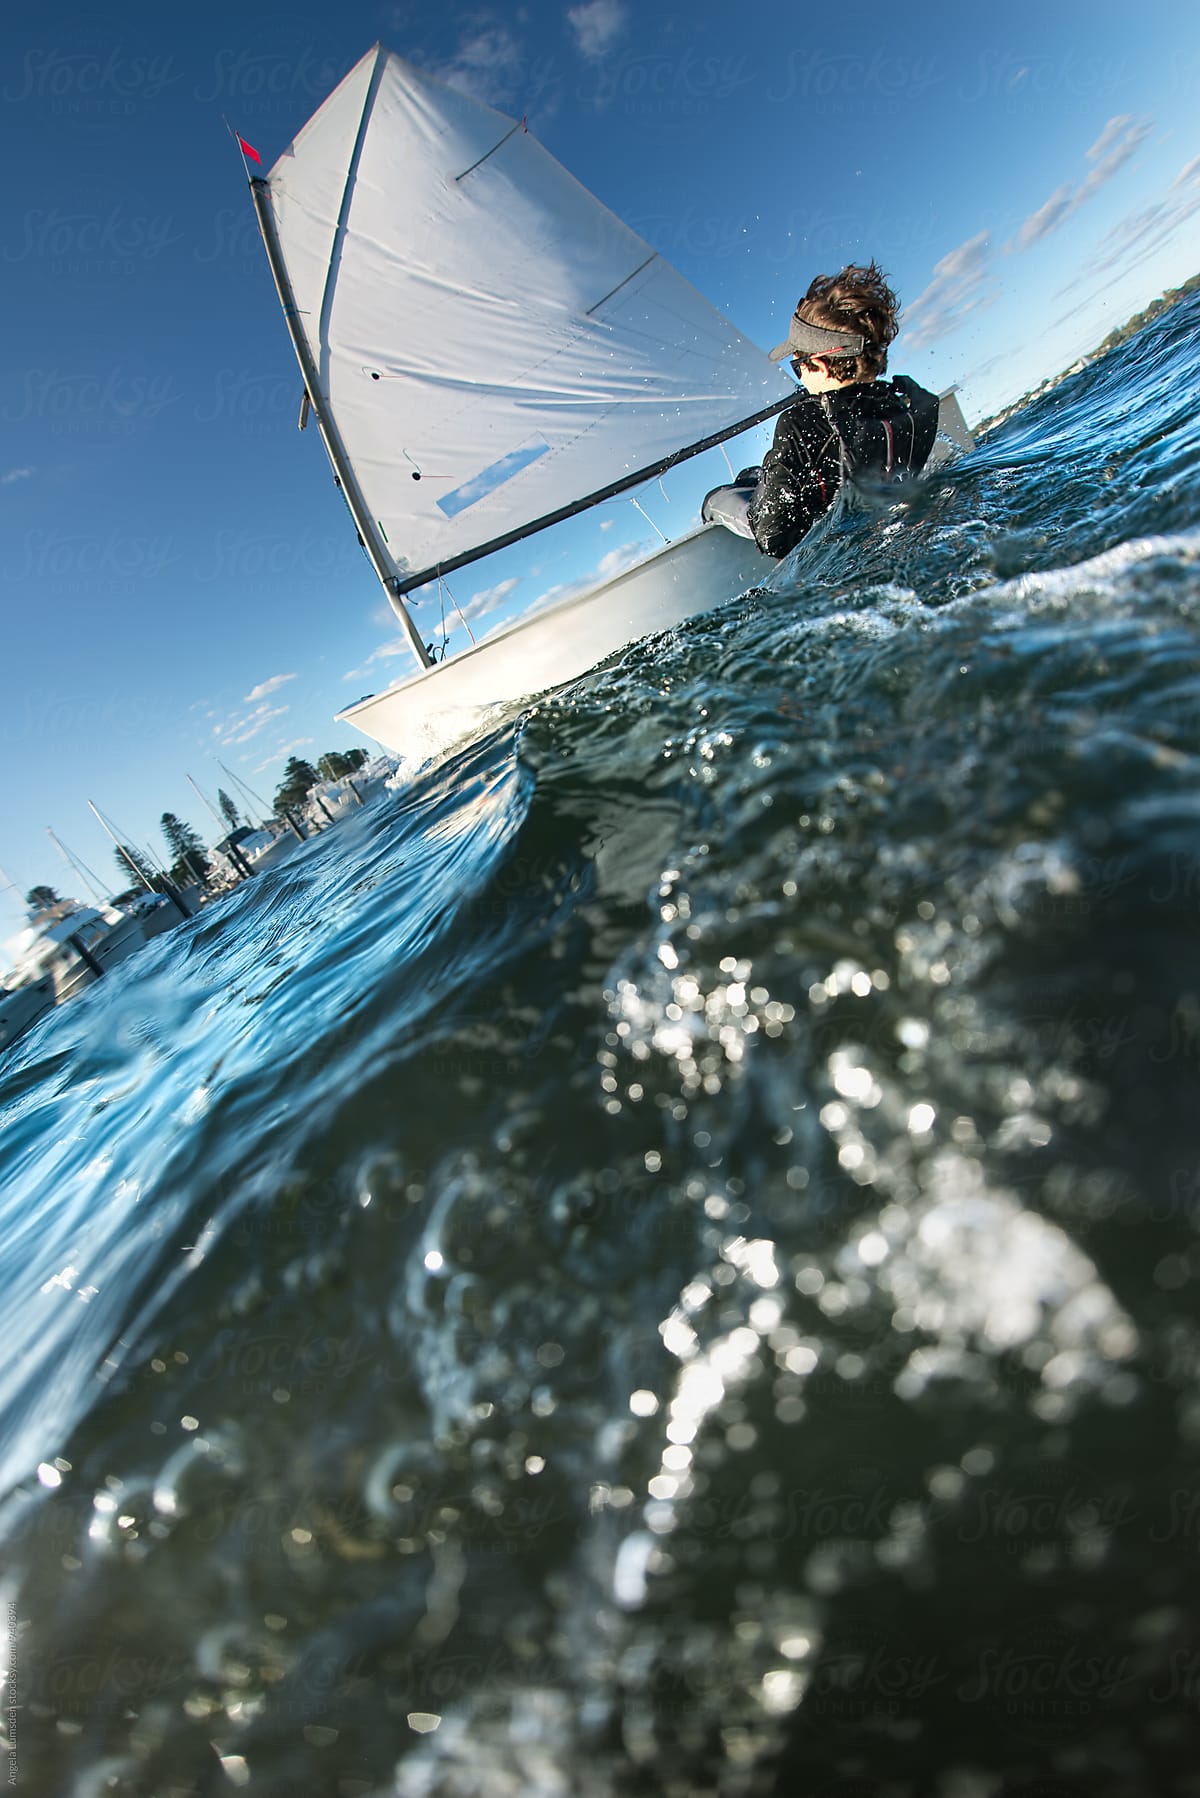 Action capture of a child sailing an optimist dinghy